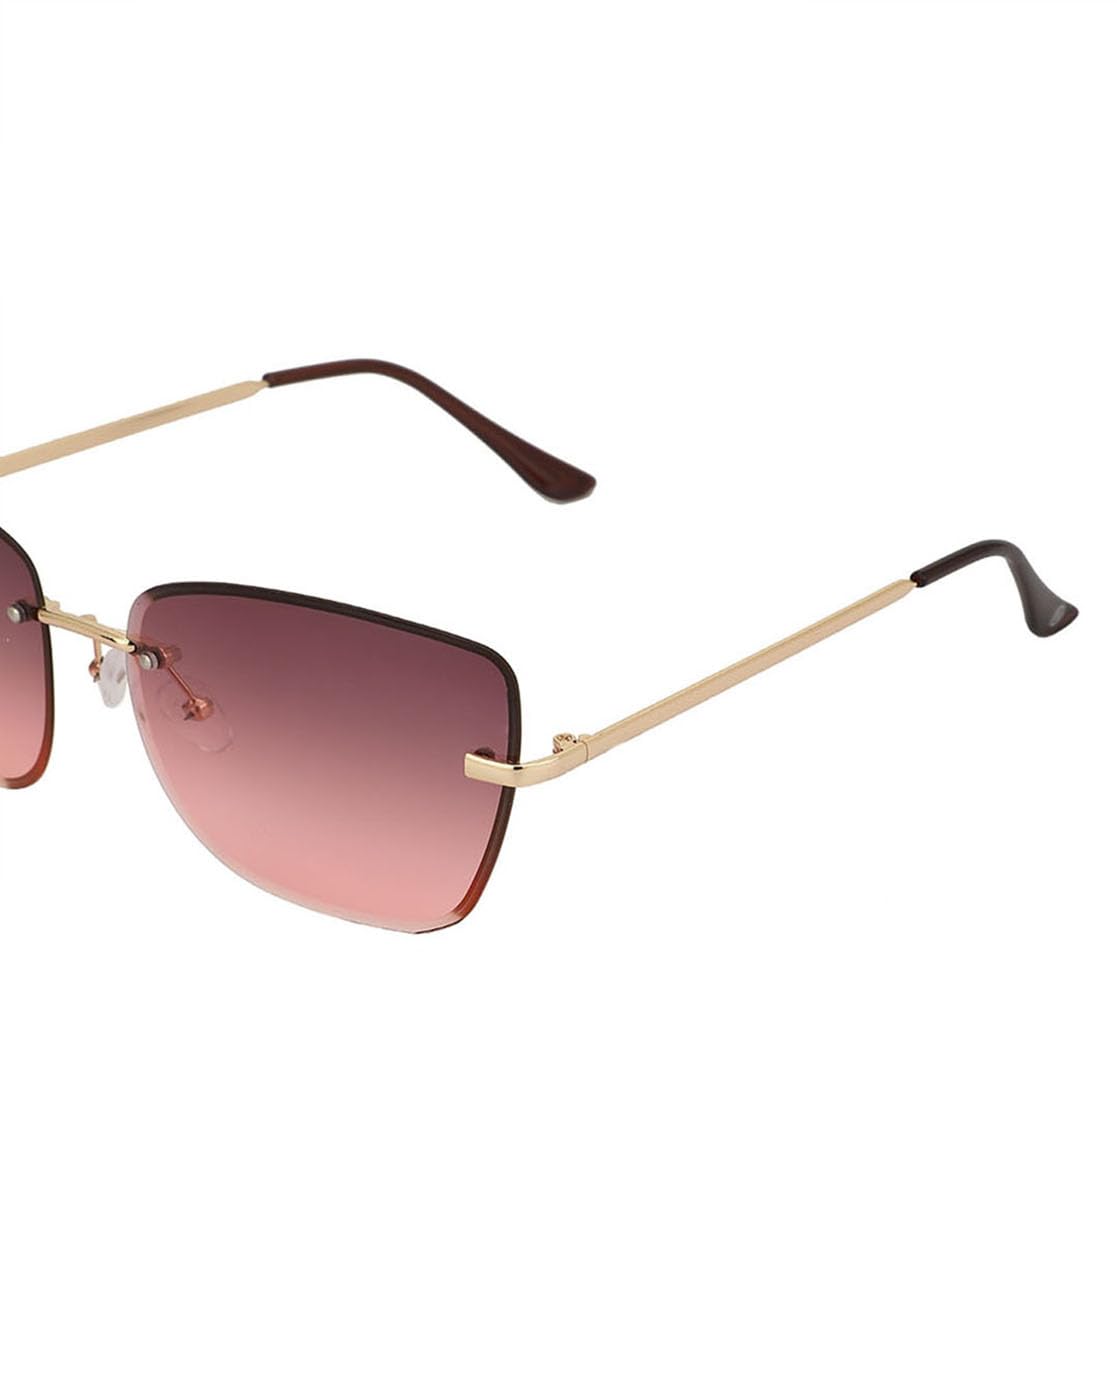 Carlton London Premium Pink & Gold Toned UV Protected Lens Rimless Sunglass for women